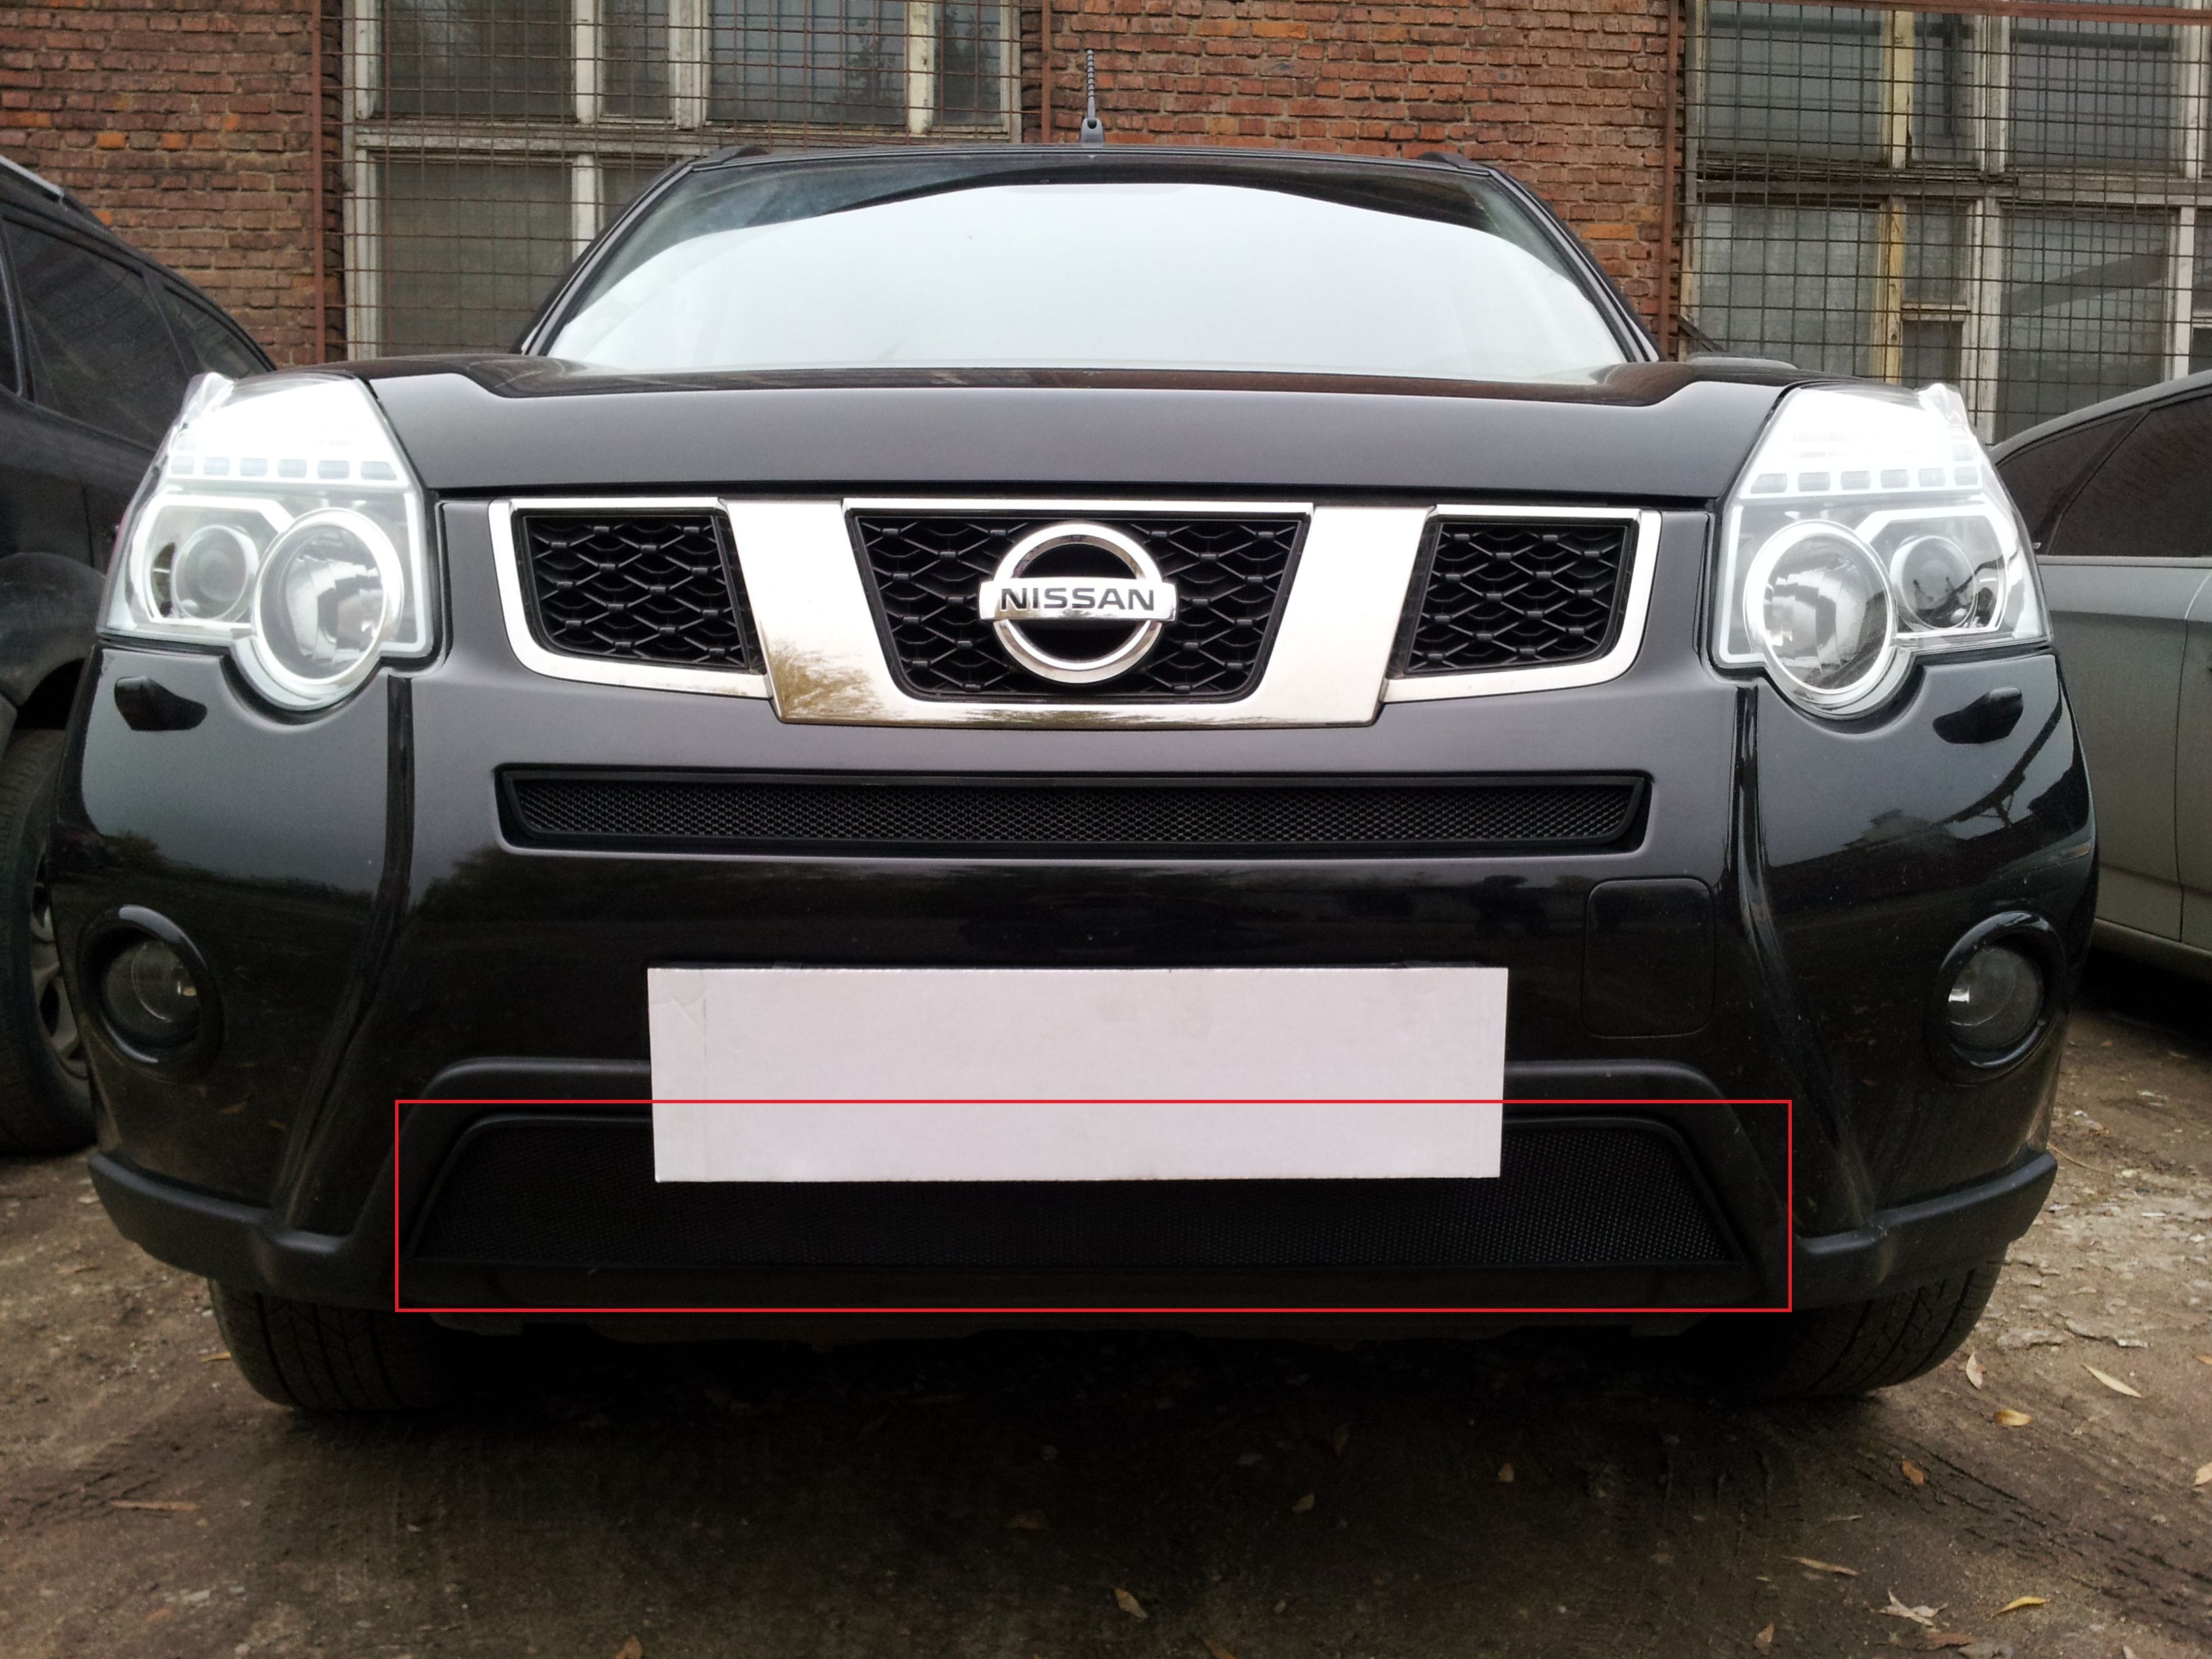 Защитная сетка радиатора ProtectGrille нижняя для Nissan X-Trail (2011-2014 Черная)